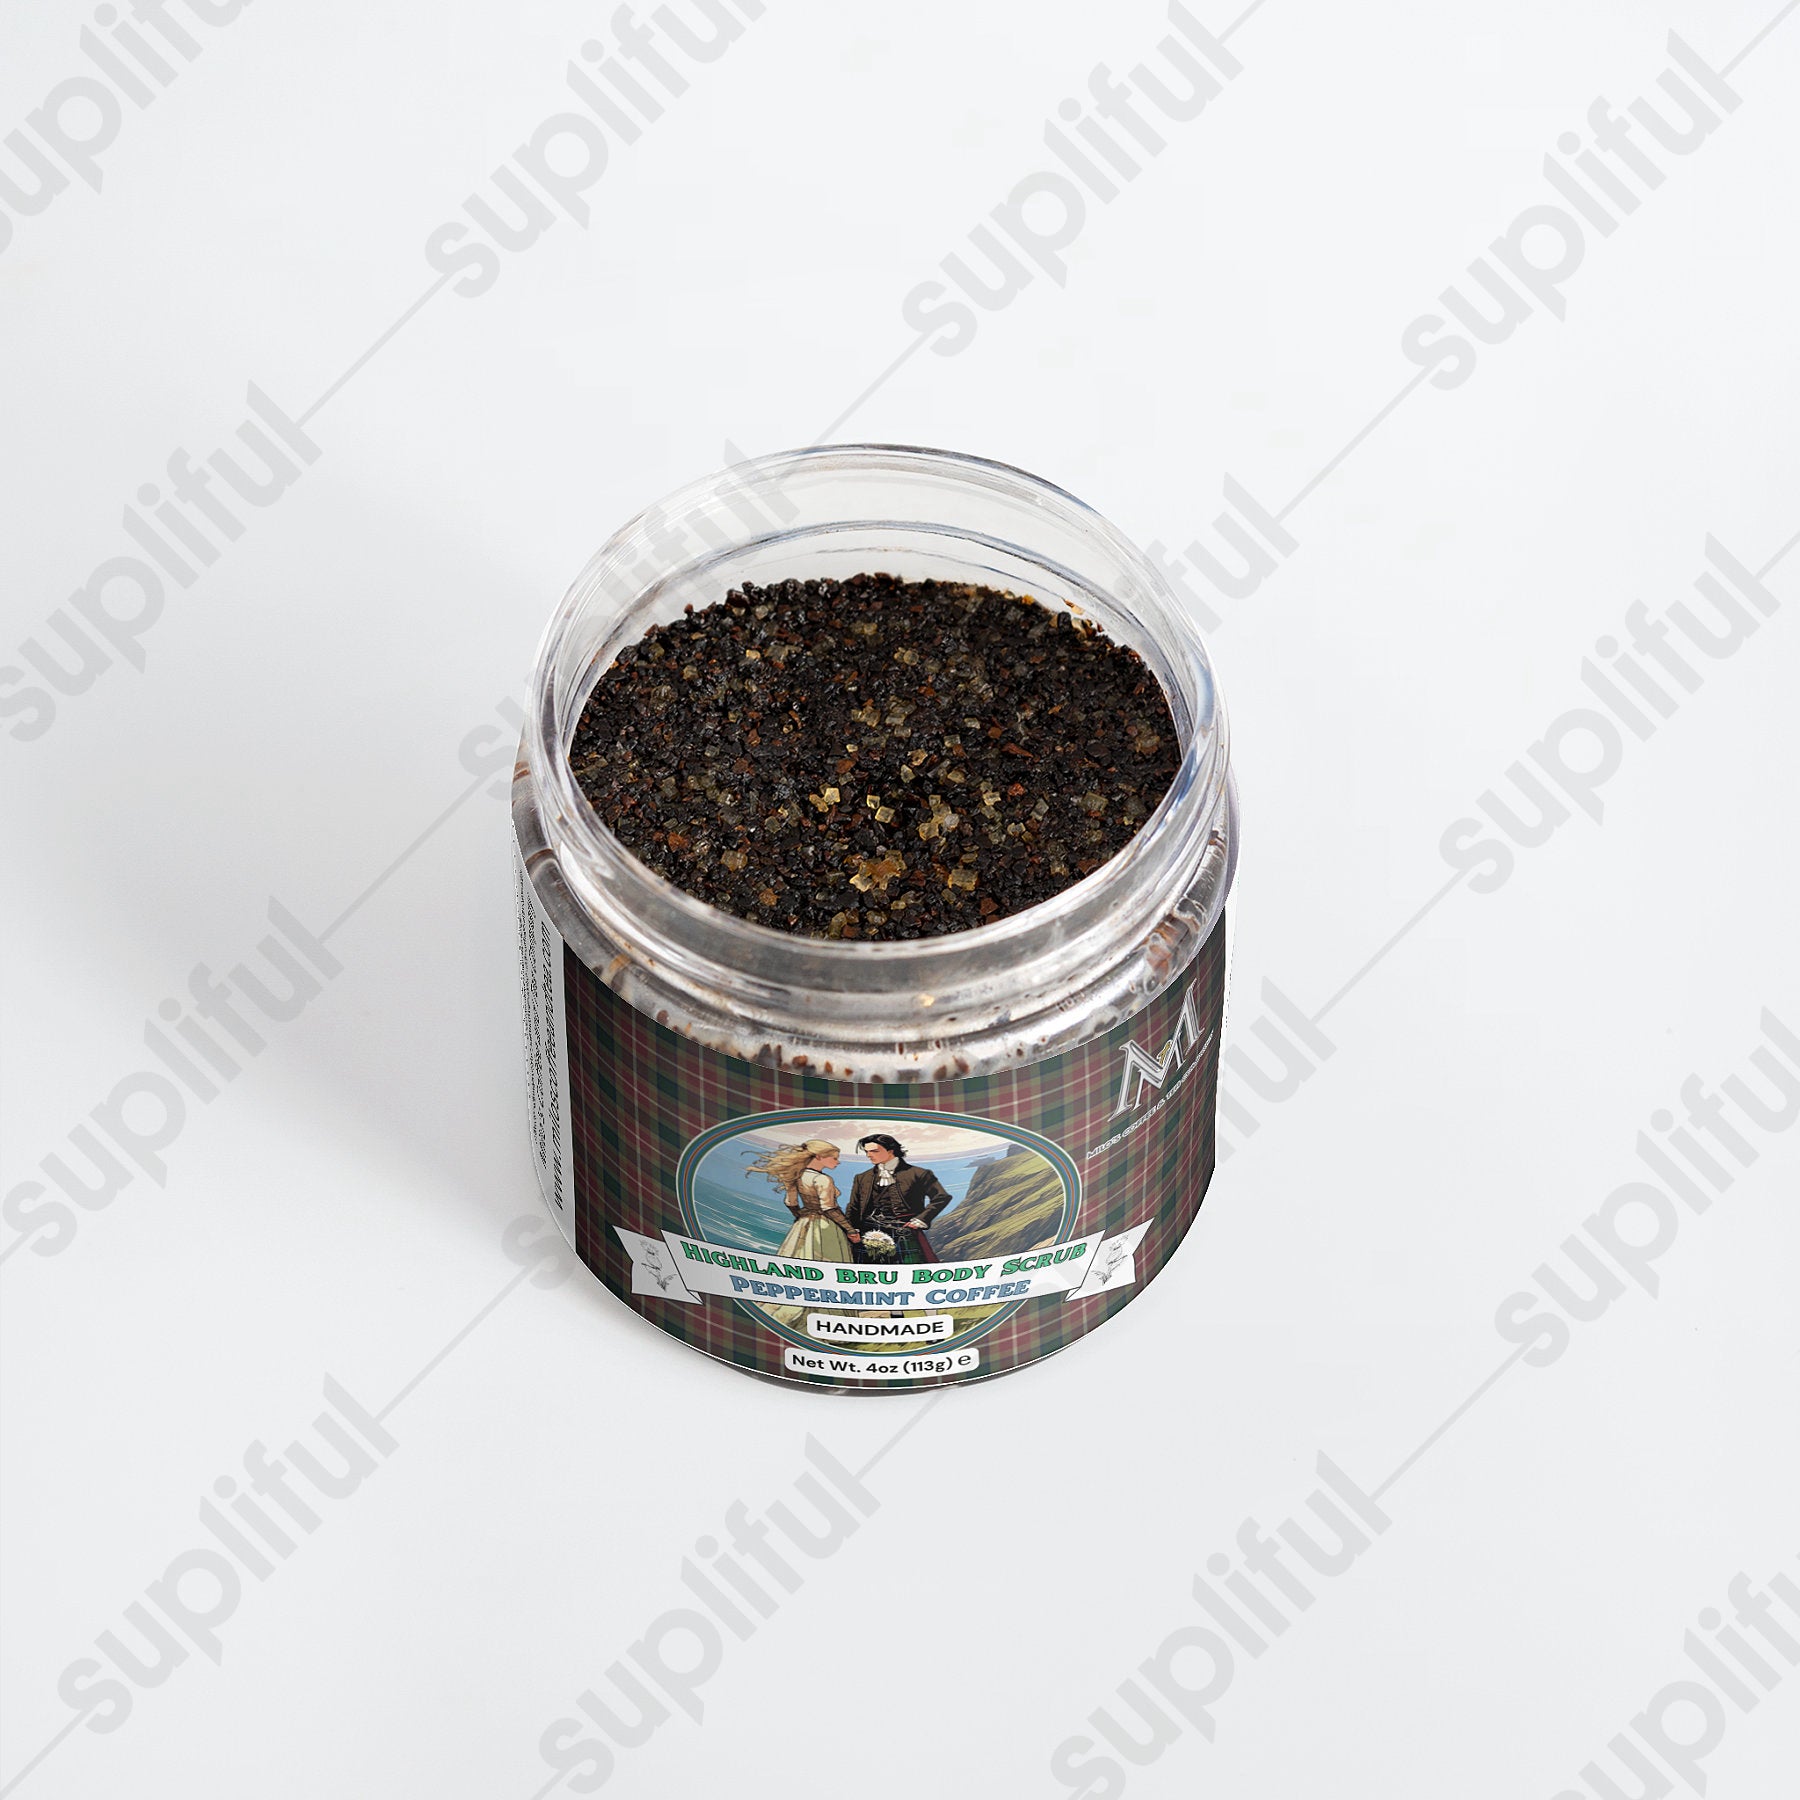 Highland Bru Body Scrub Peppermint Coffee - Milo's Coffee and Tea Company